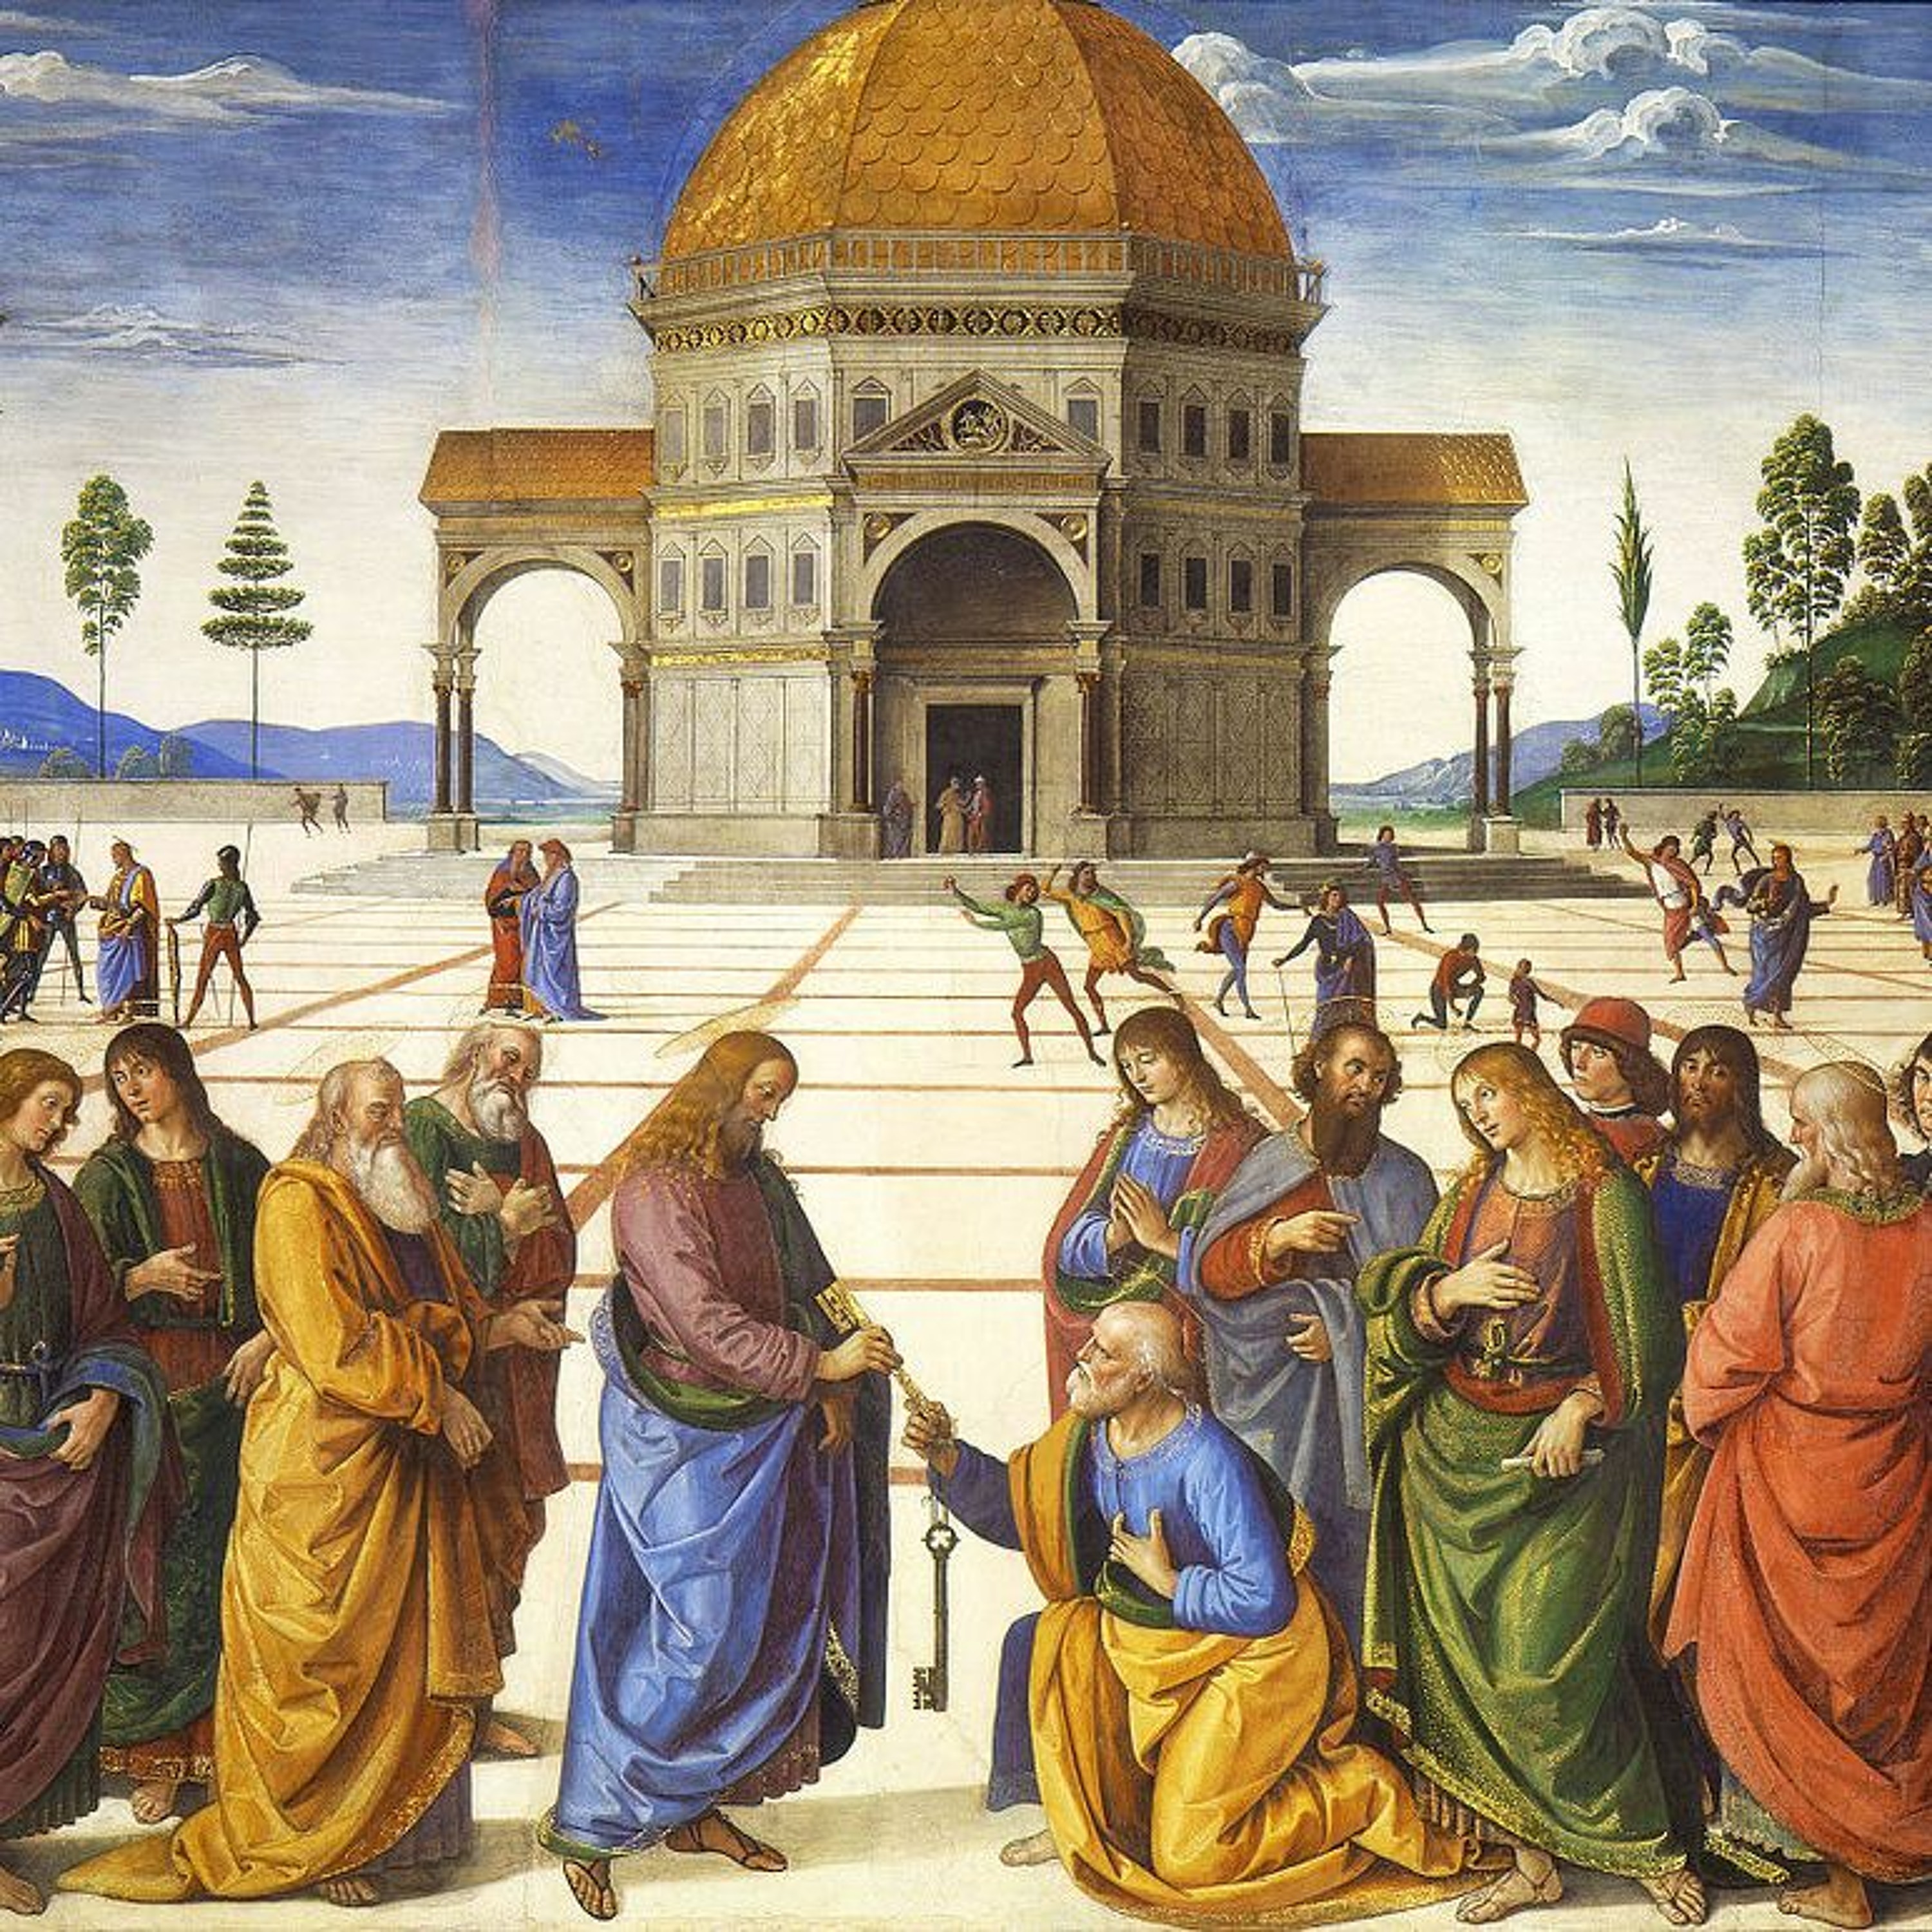 Peter Casarella - Passage to Modernity: Renaissance Christianity Today